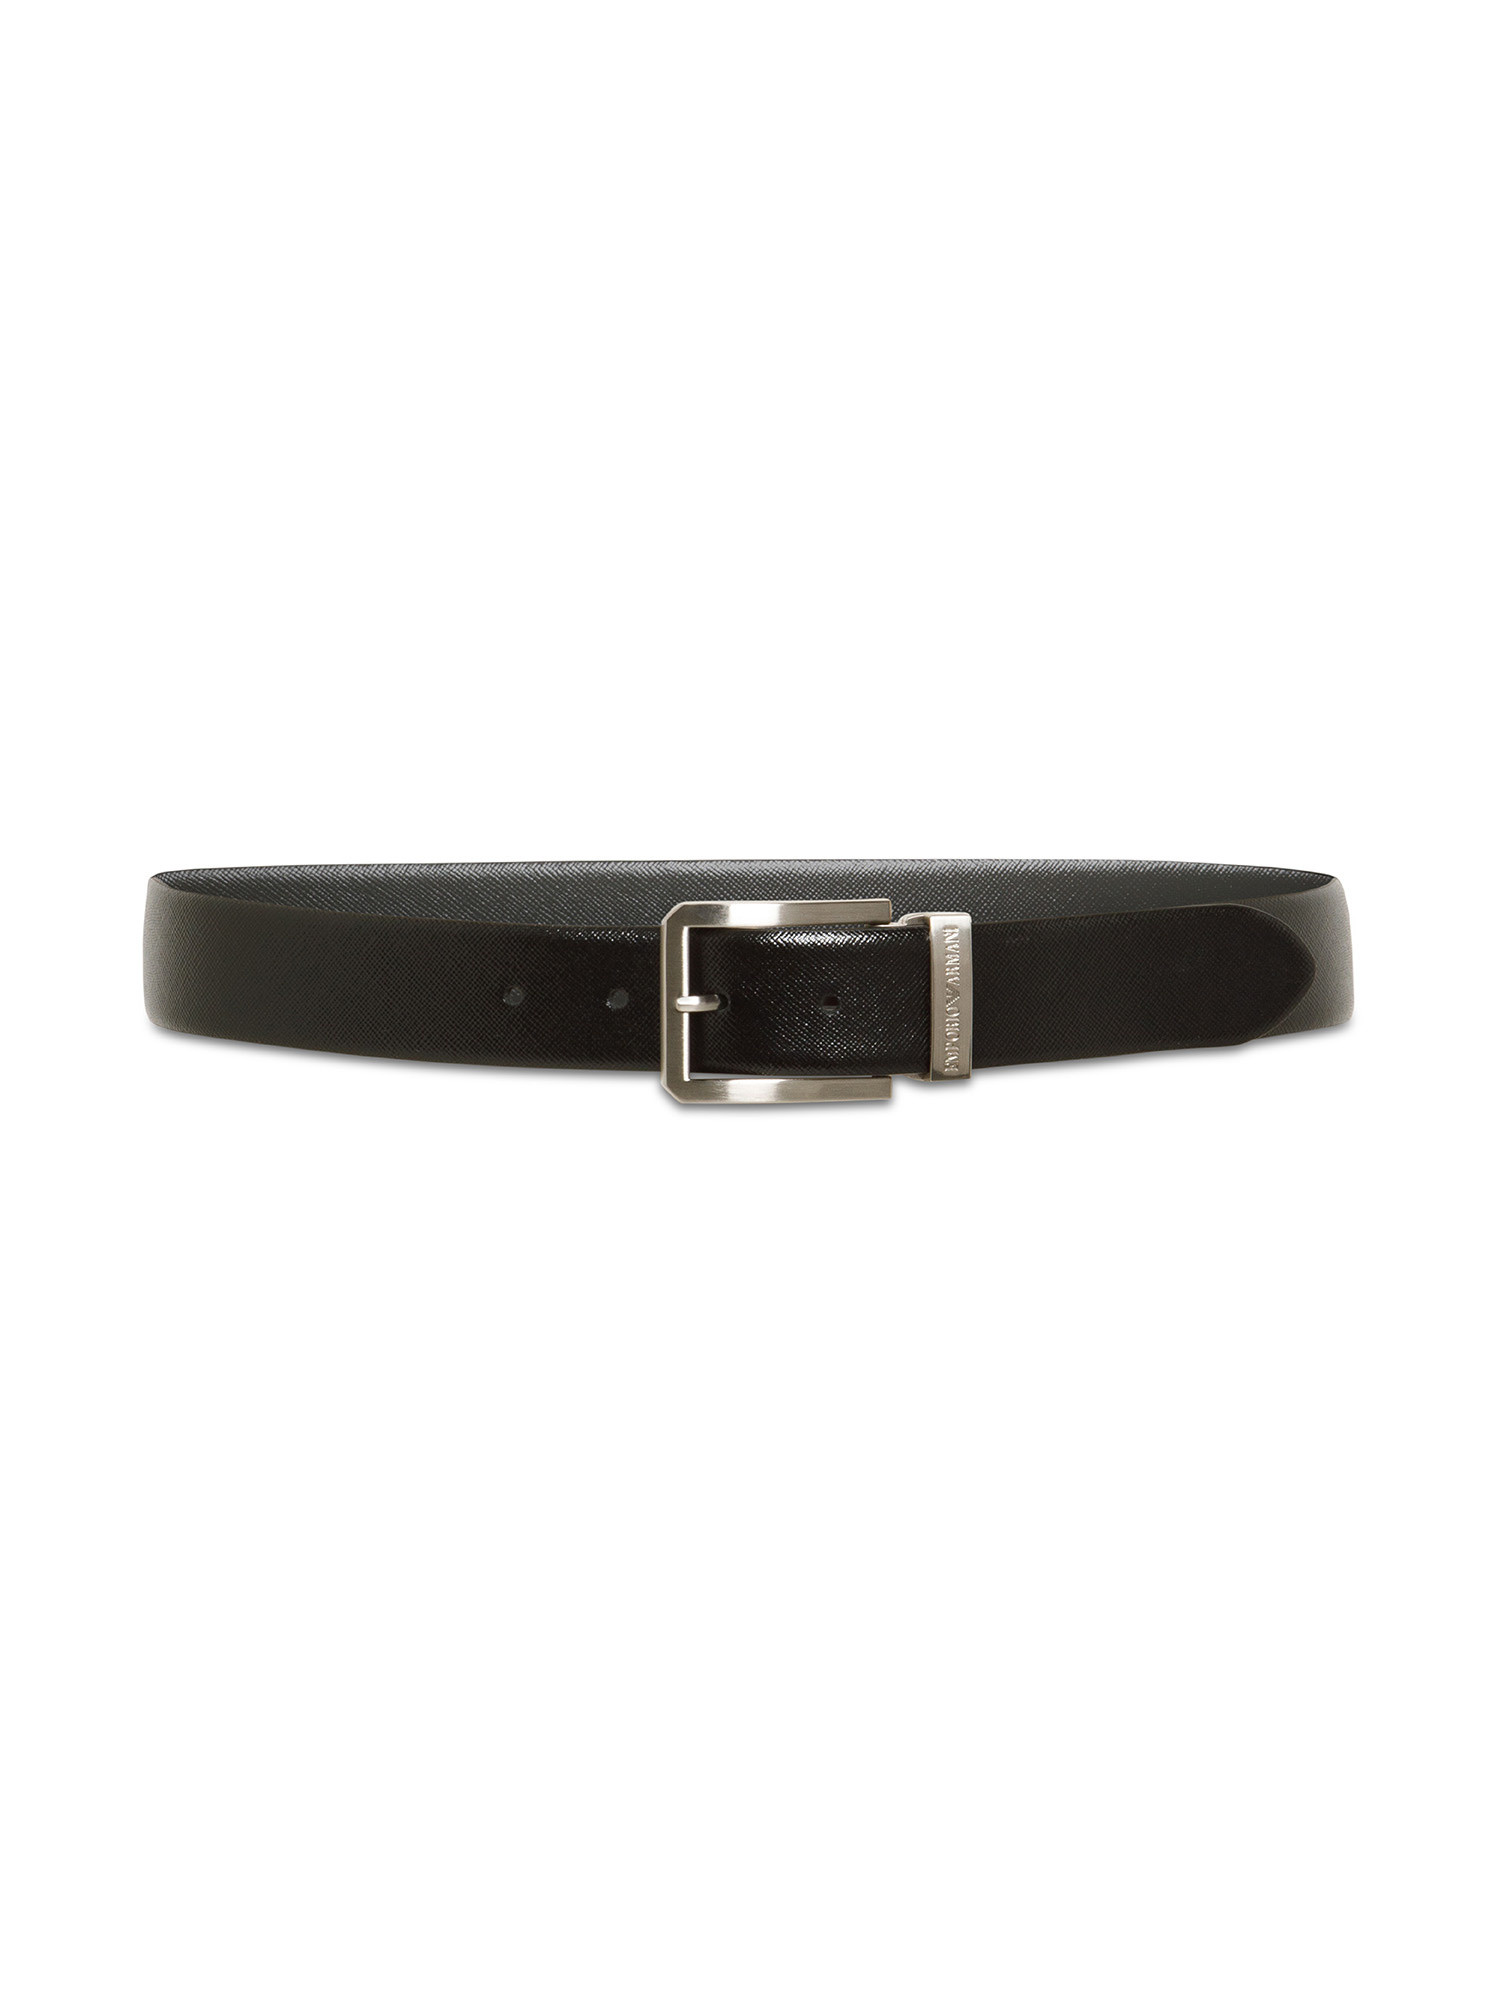 Emporio Armani - Saffiano leather belt, Black, large image number 1